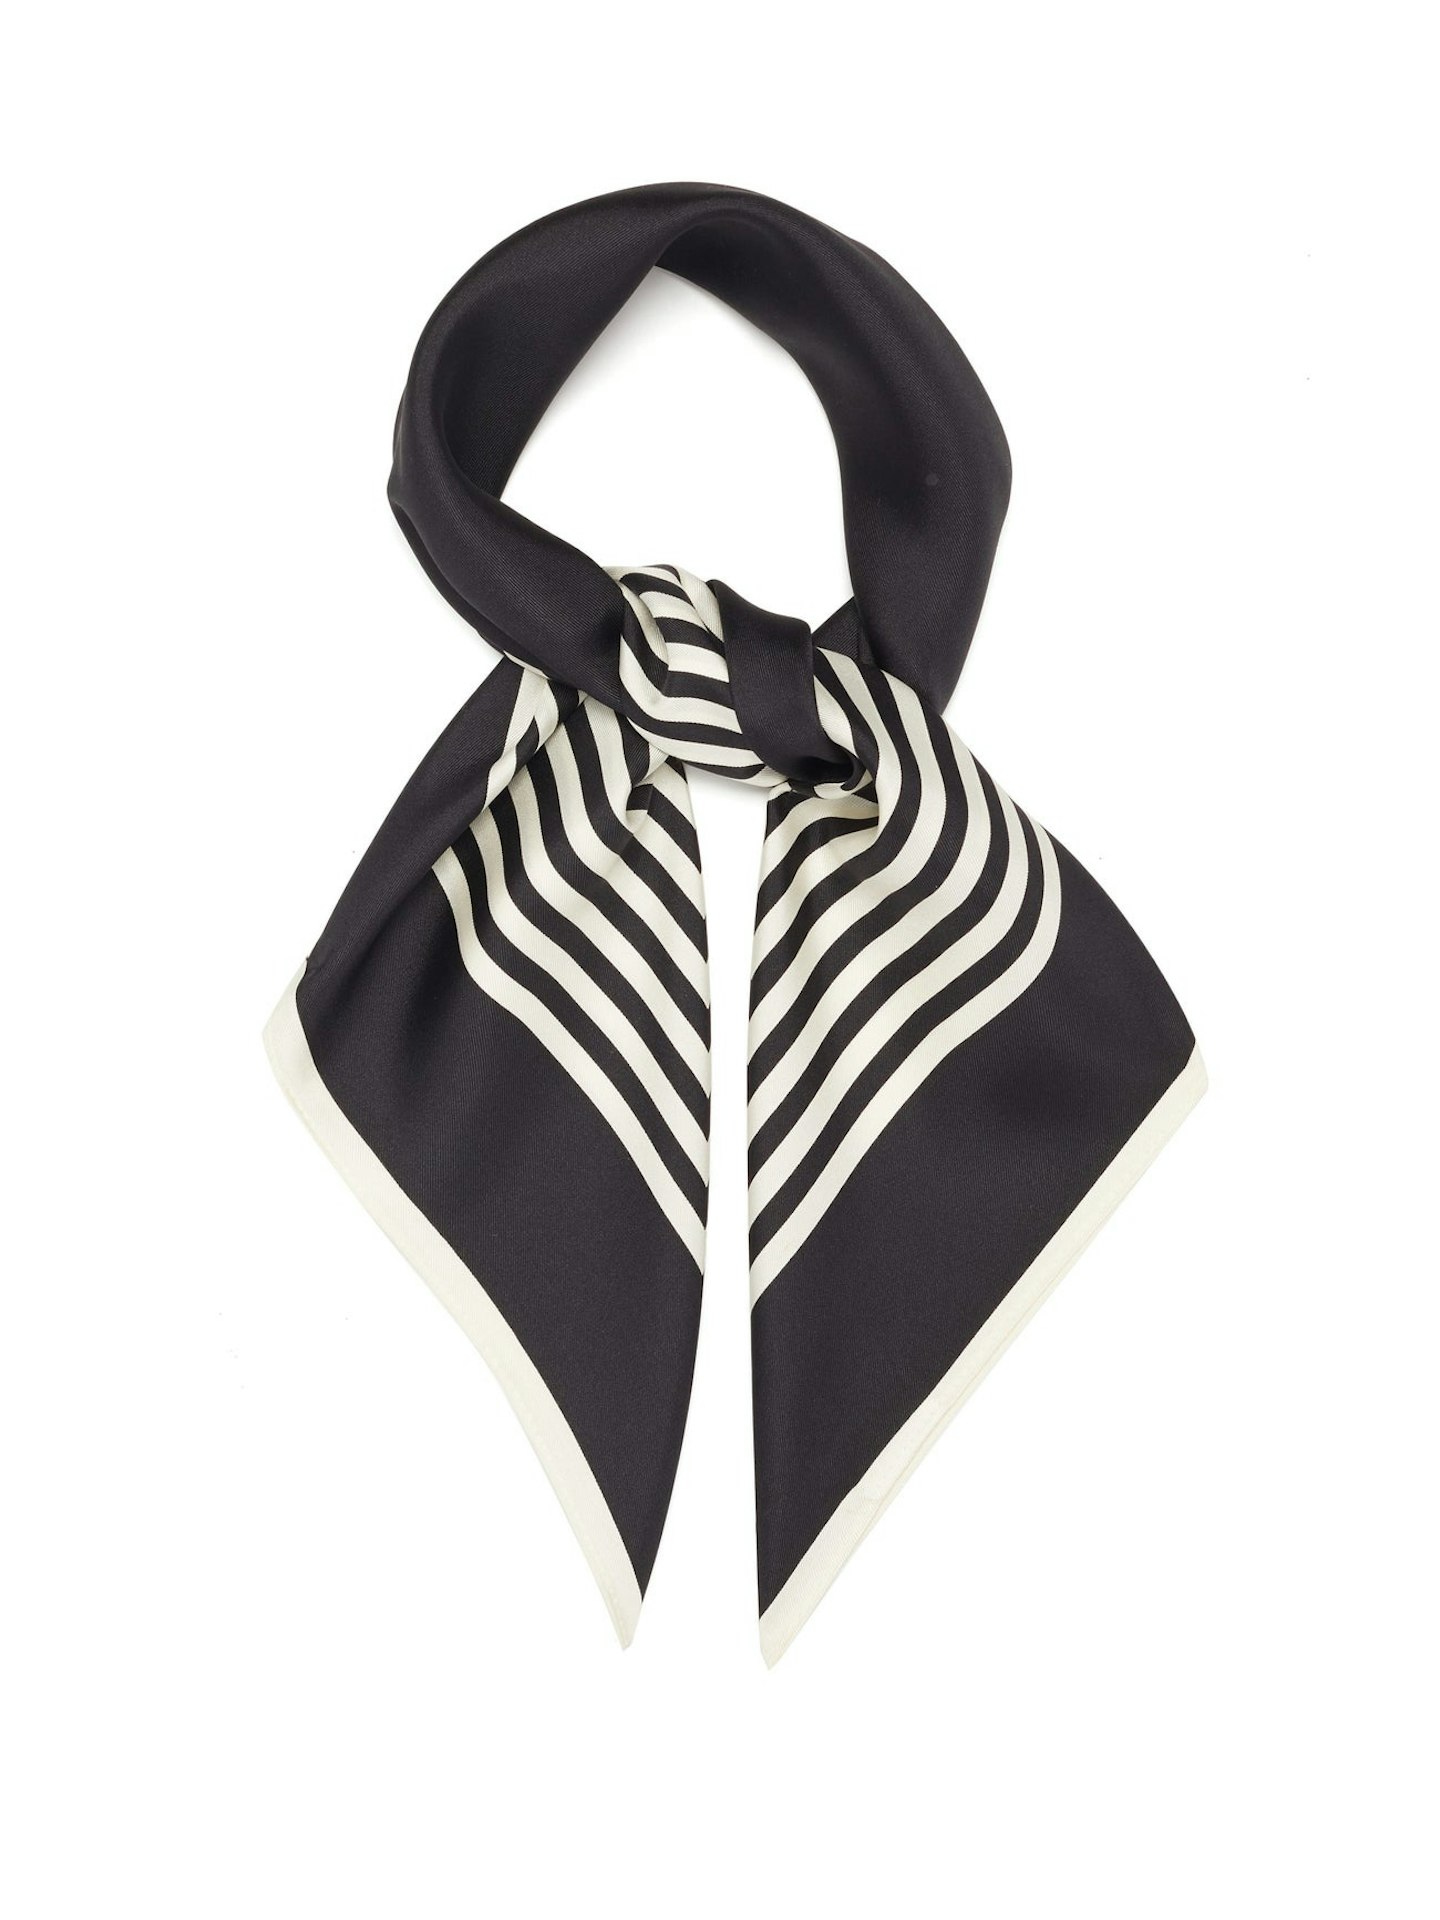 Le Scarf, No.2 striped silk-twill scarf, WAS £80 NOW £60